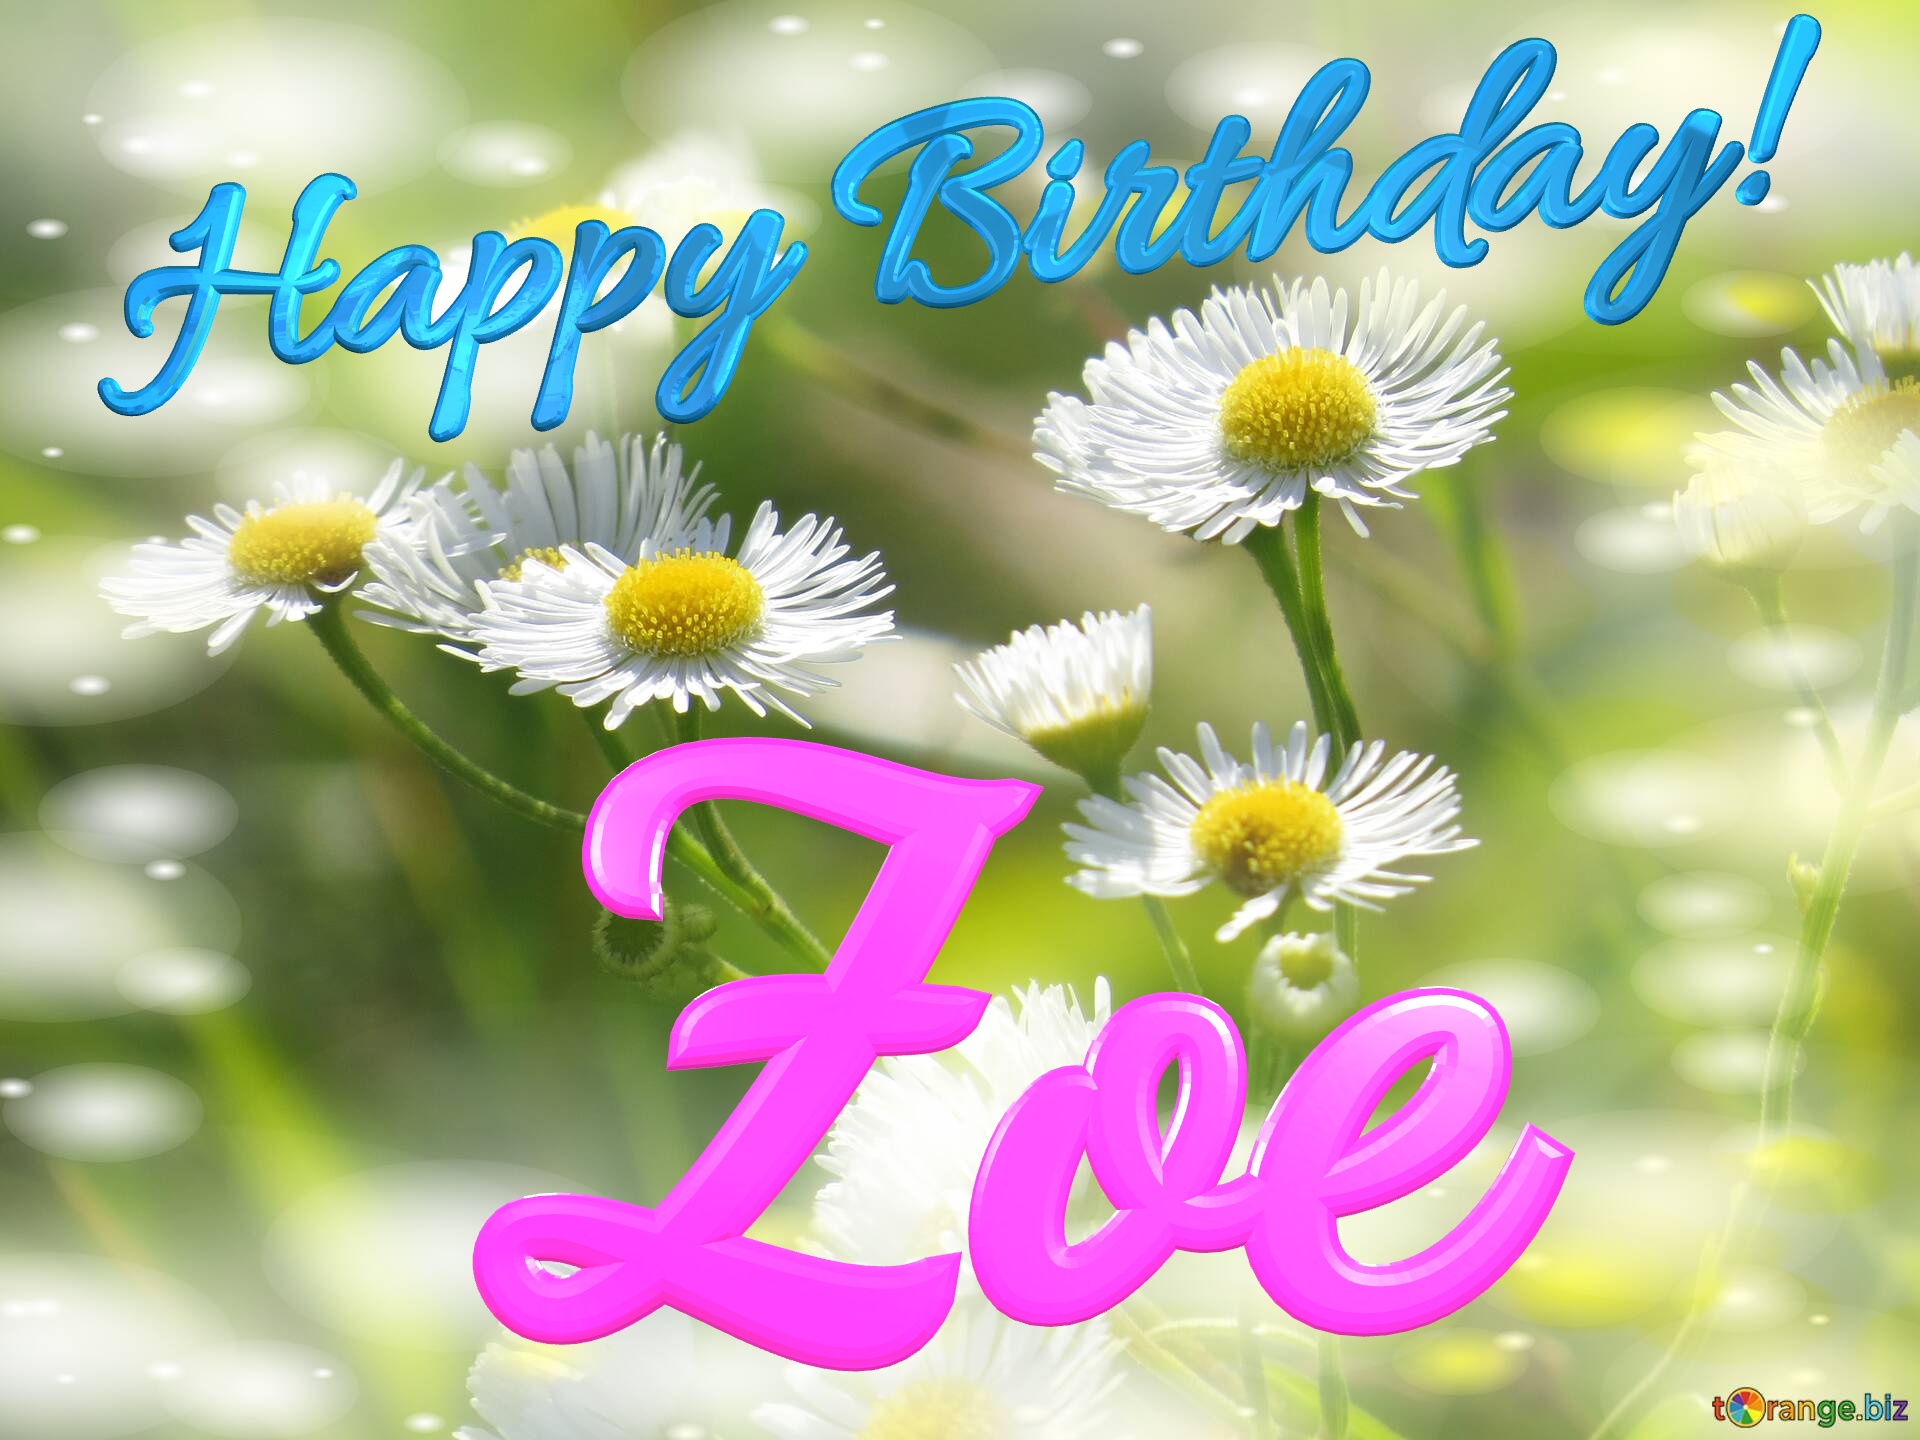 Zoe Happy Birthday! Daisies bokeh background №0